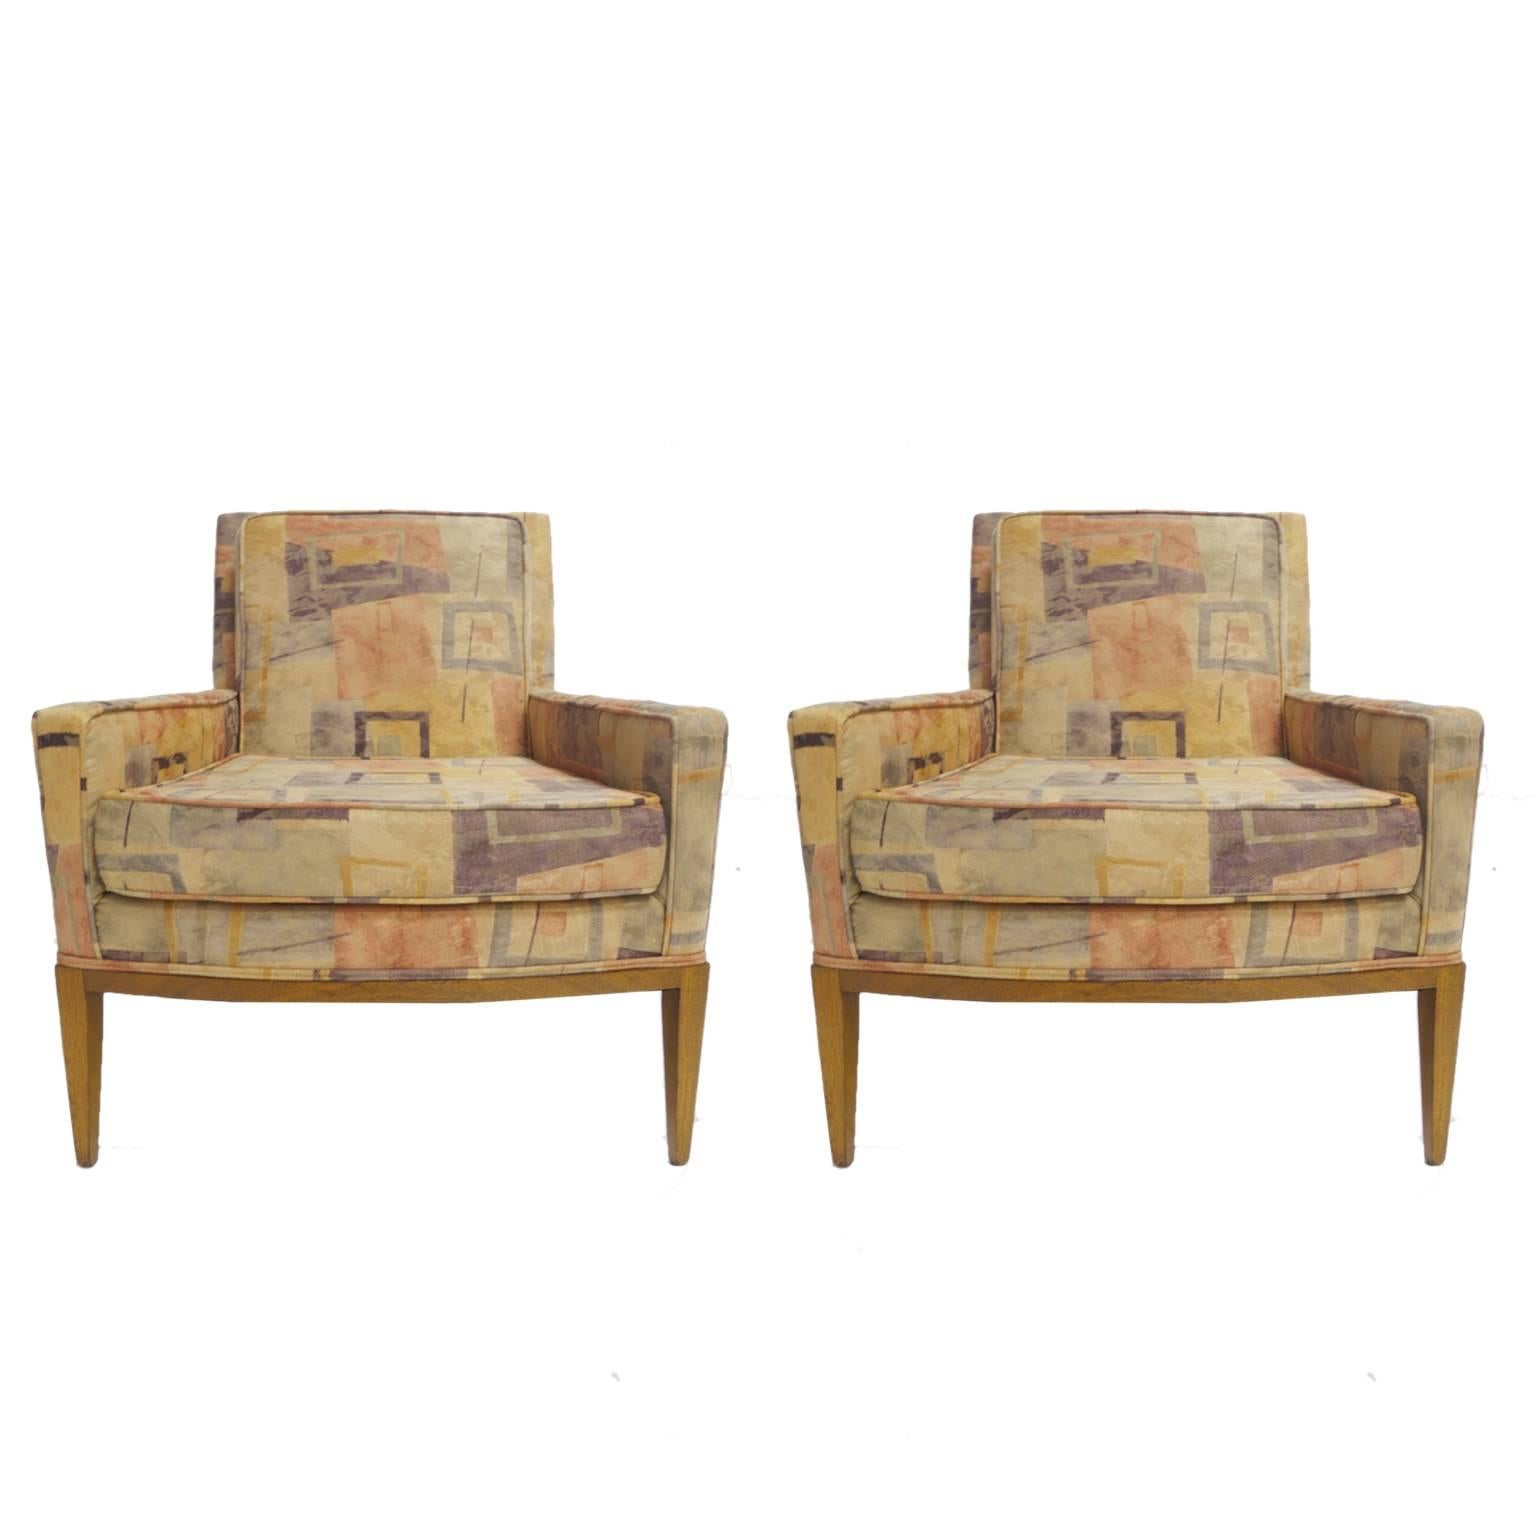 Mid-Century Modern Pair of Sleek Curved Arm Harvey Probber Chairs